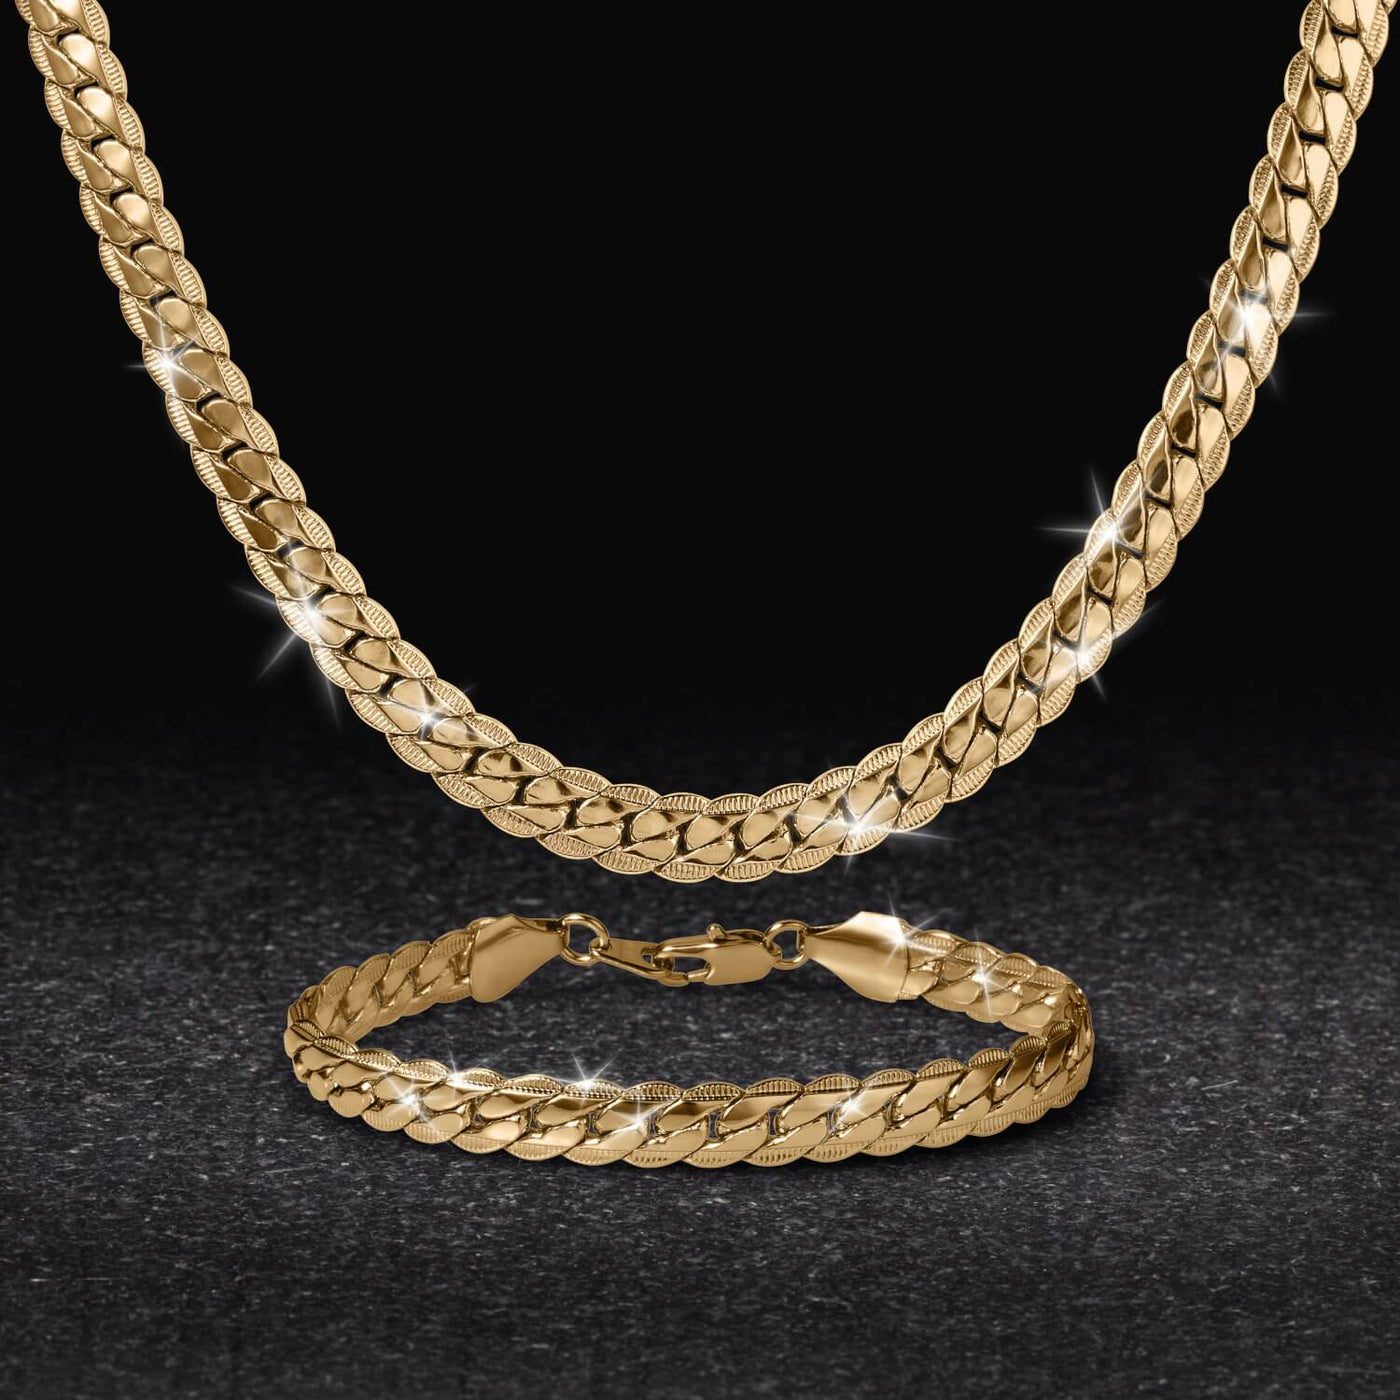 Daniel Steiger Imperial Golden Men's Necklace